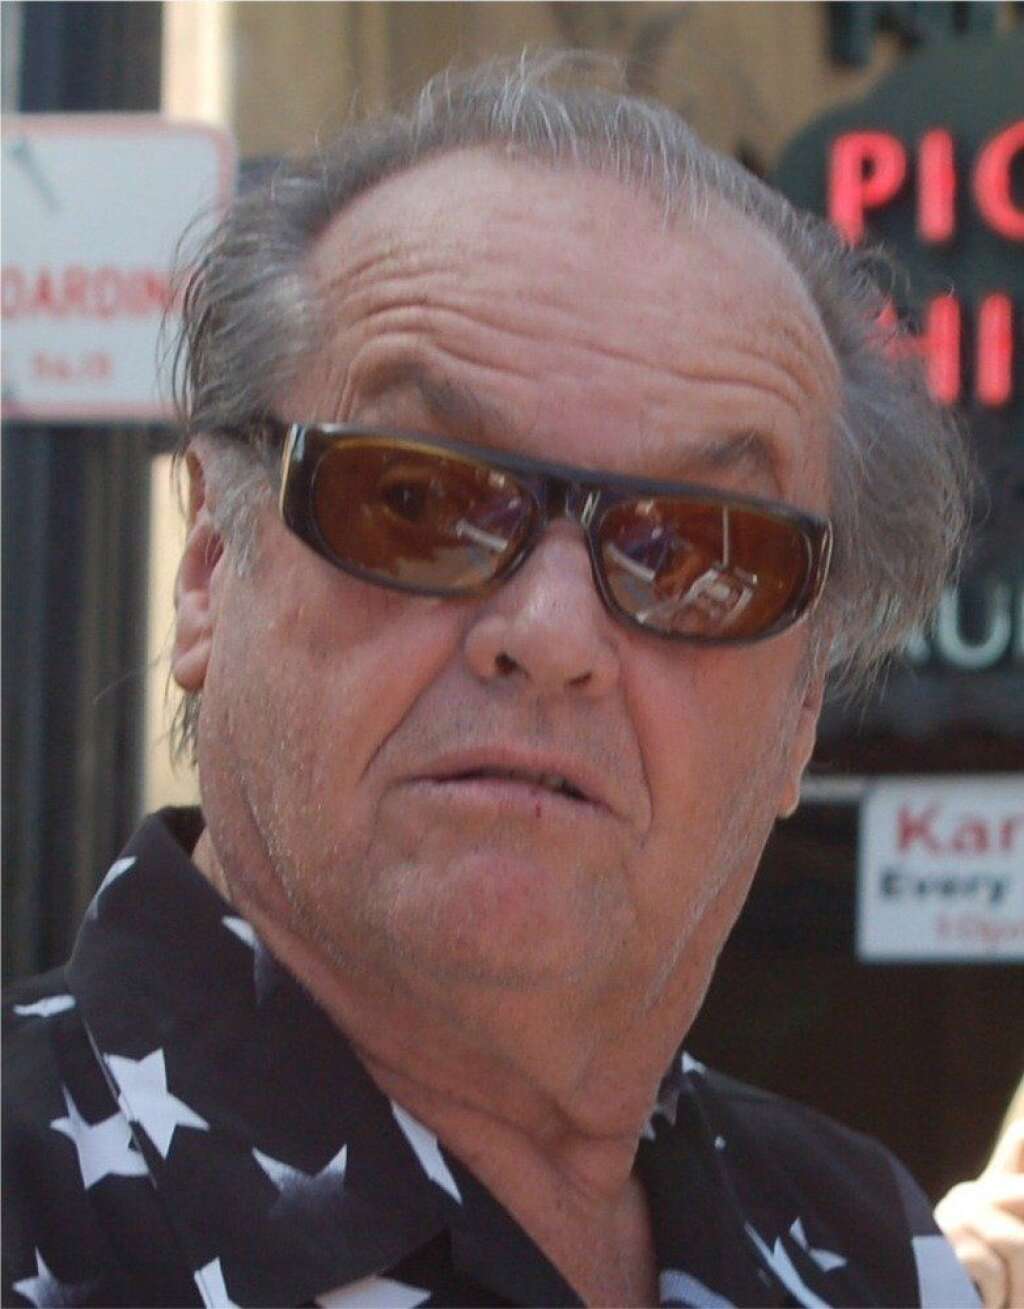 Jack Nicholson - 6. Fortune estimée : 400 millions de dollars  Source : <a href="http://www.wealthx.com/articles/2014/top-10-hollywood-and-bollywood-actors%E2%80%8B/" target="_blank">Wealth-X</a>